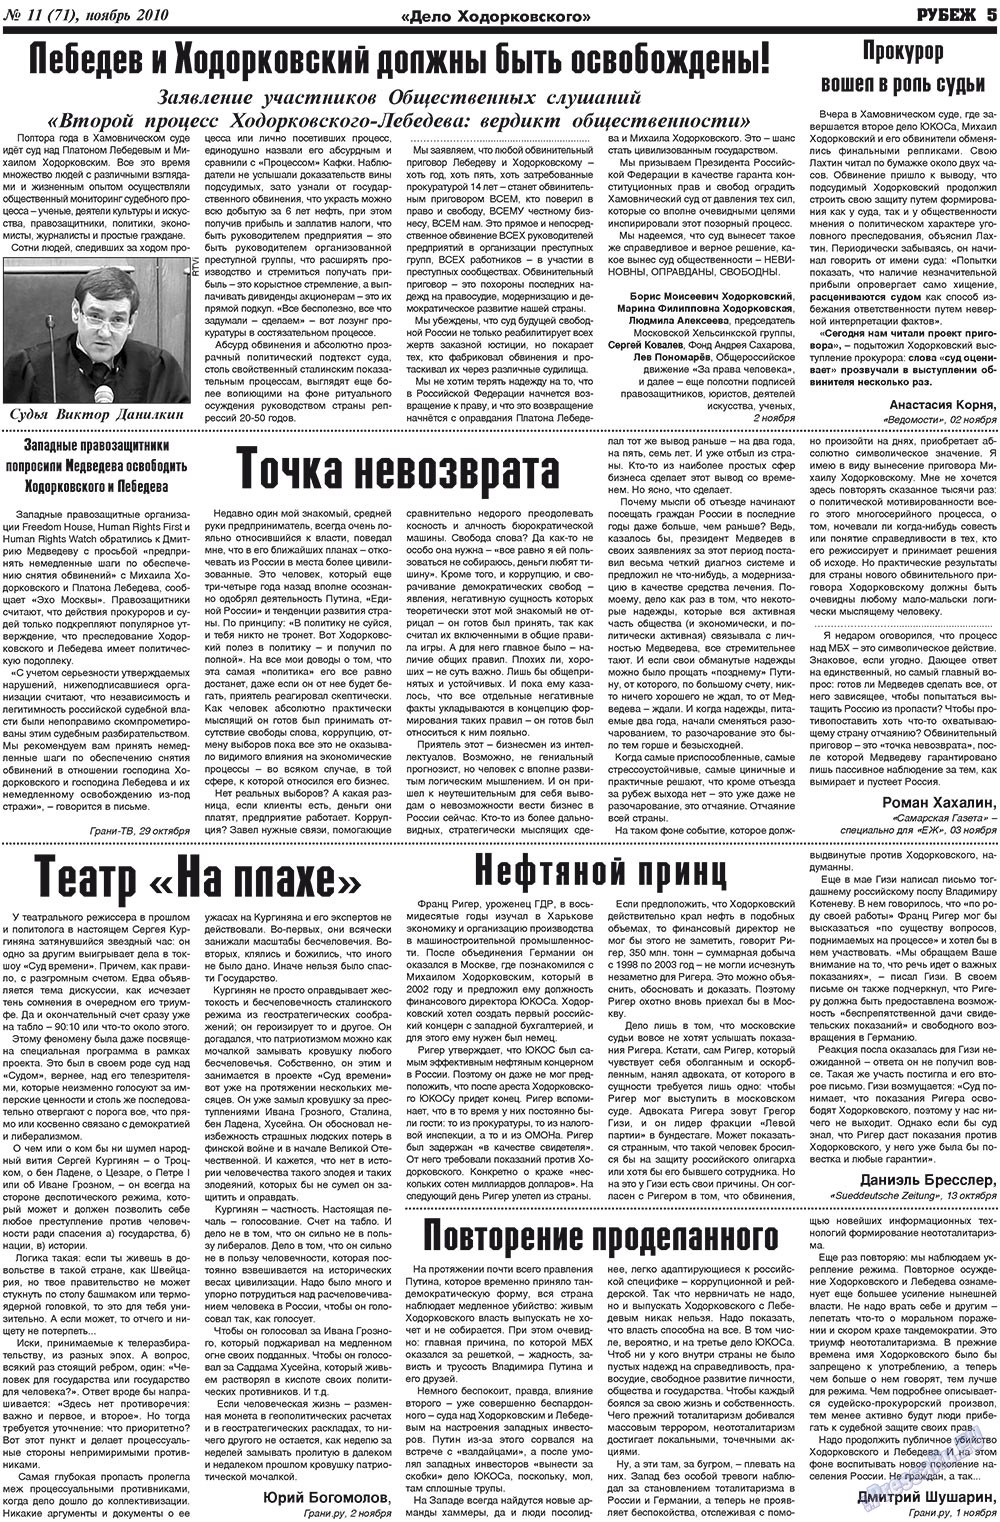 Рубеж, газета. 2010 №11 стр.5